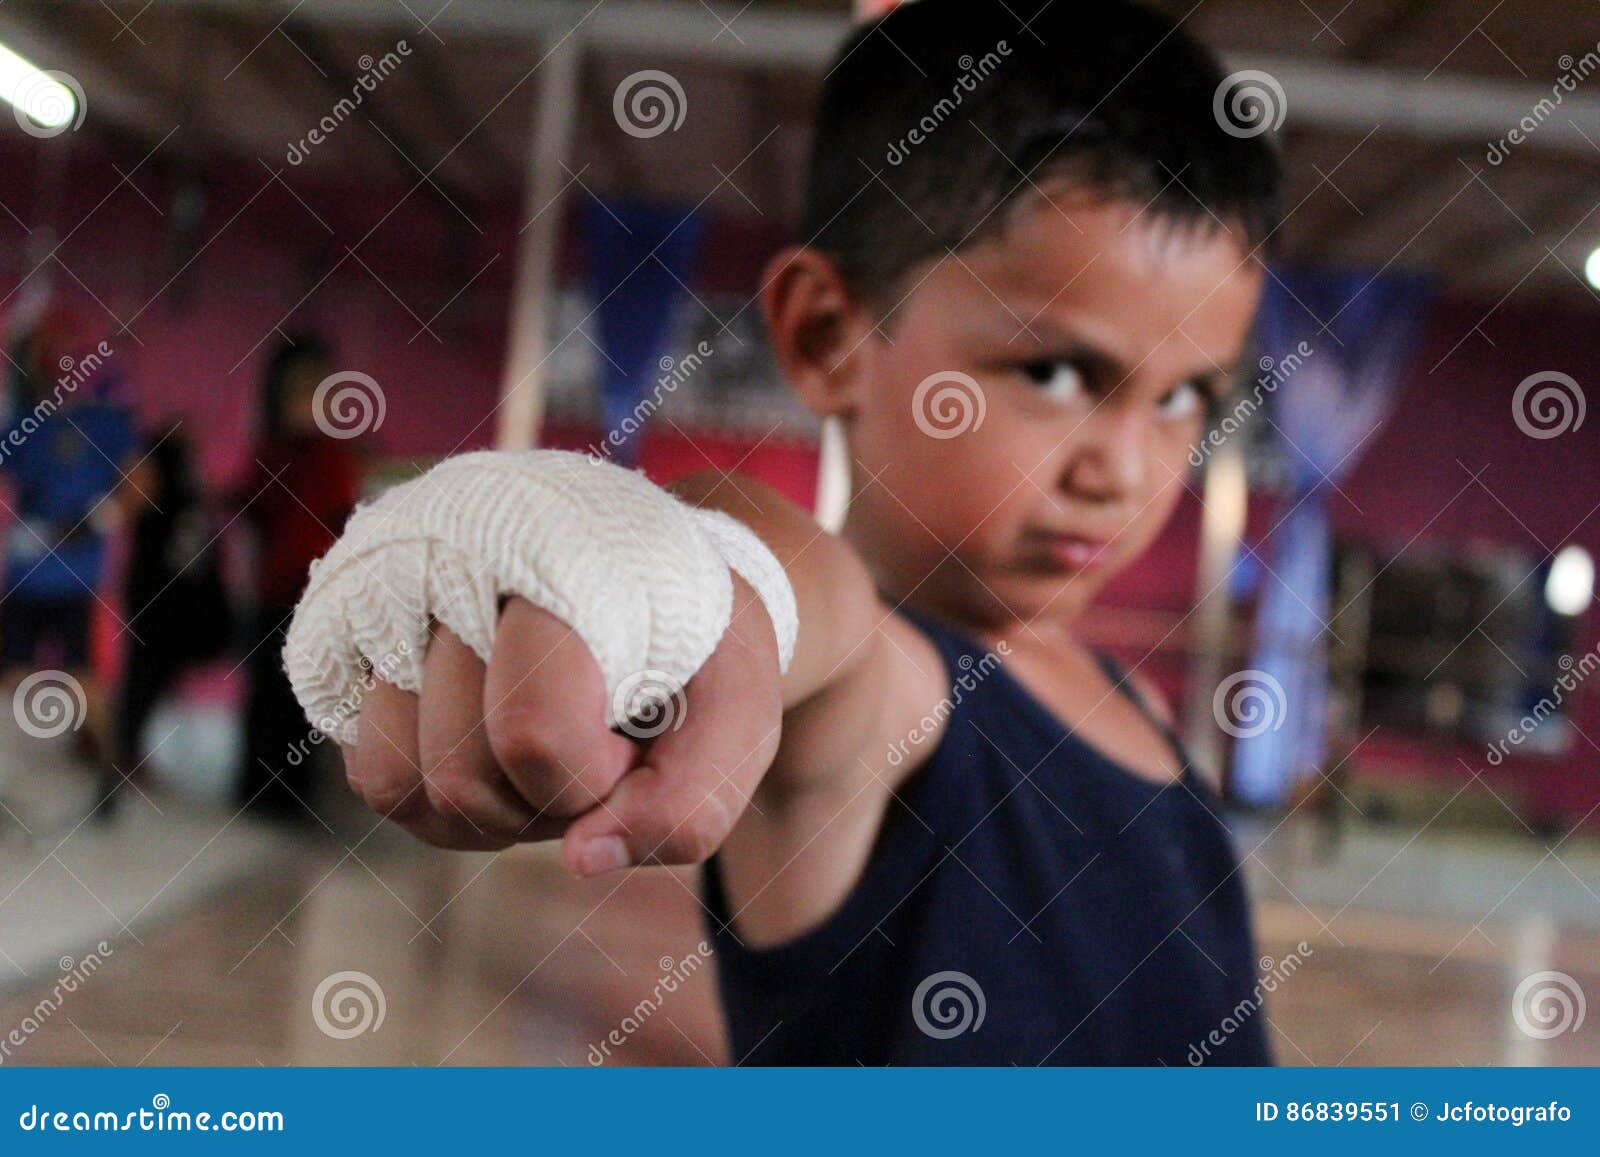 child athlete practicing box